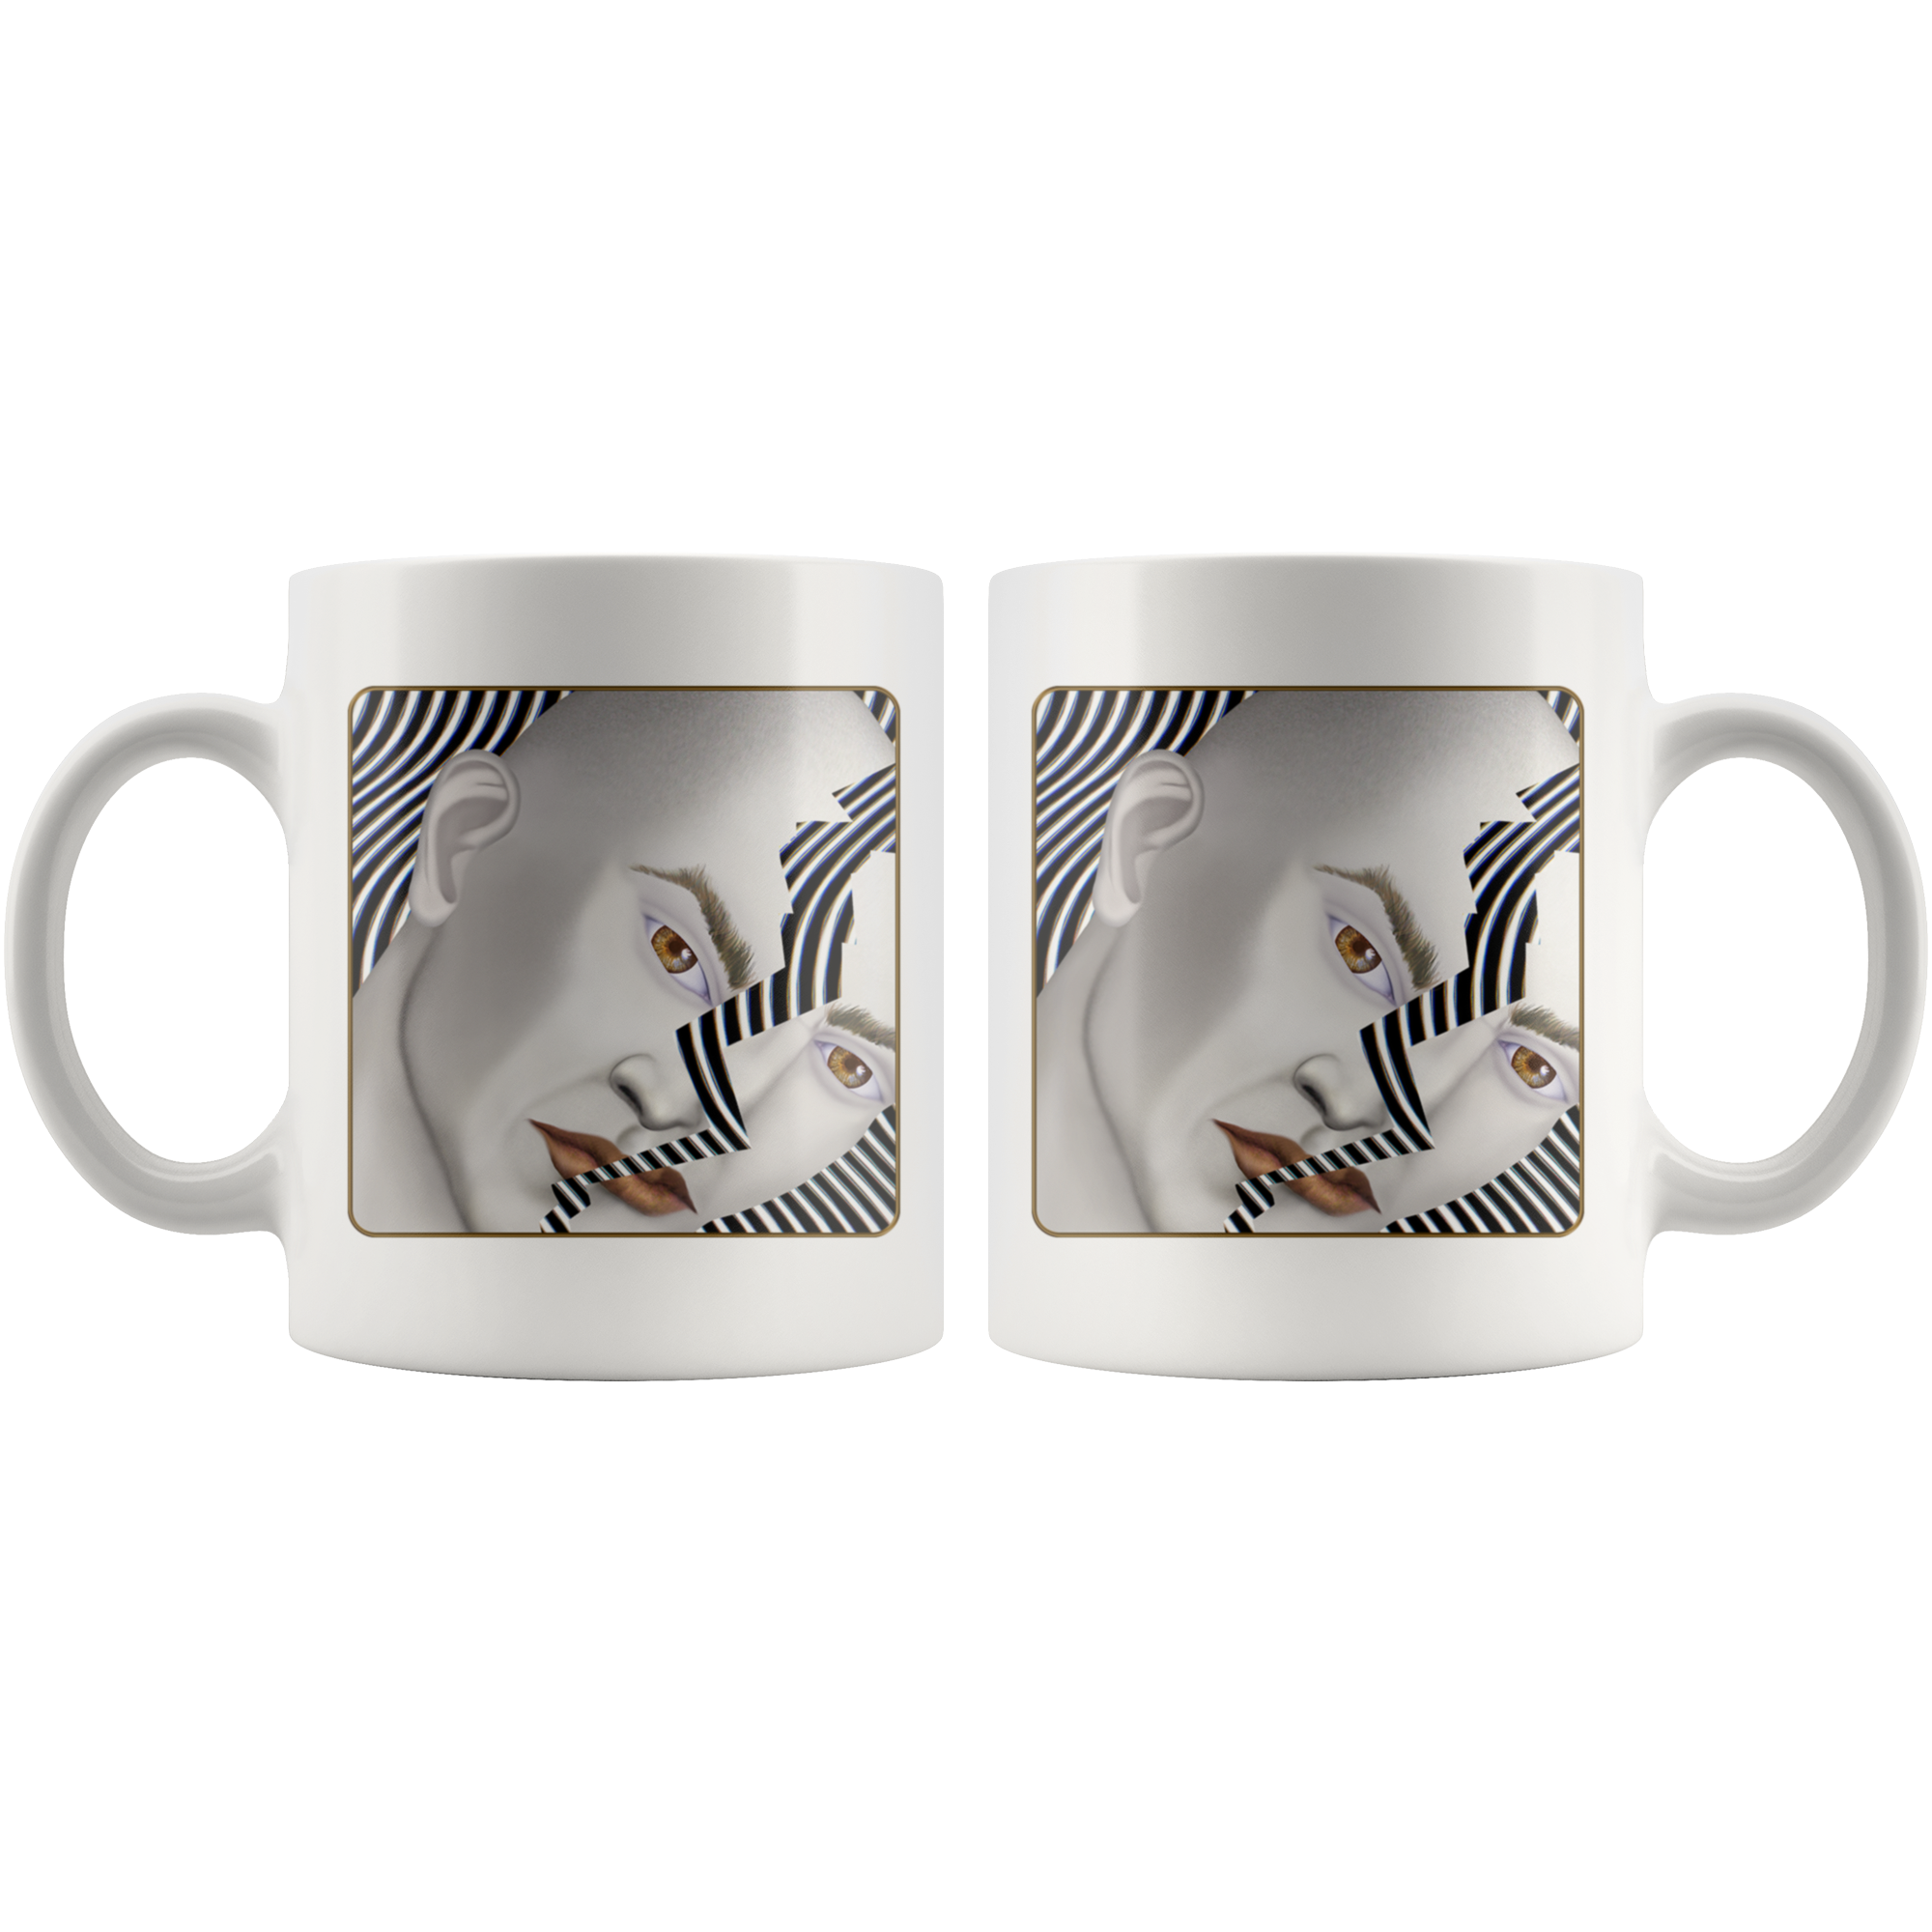 Cracked Until Coffee - 11 oz mug